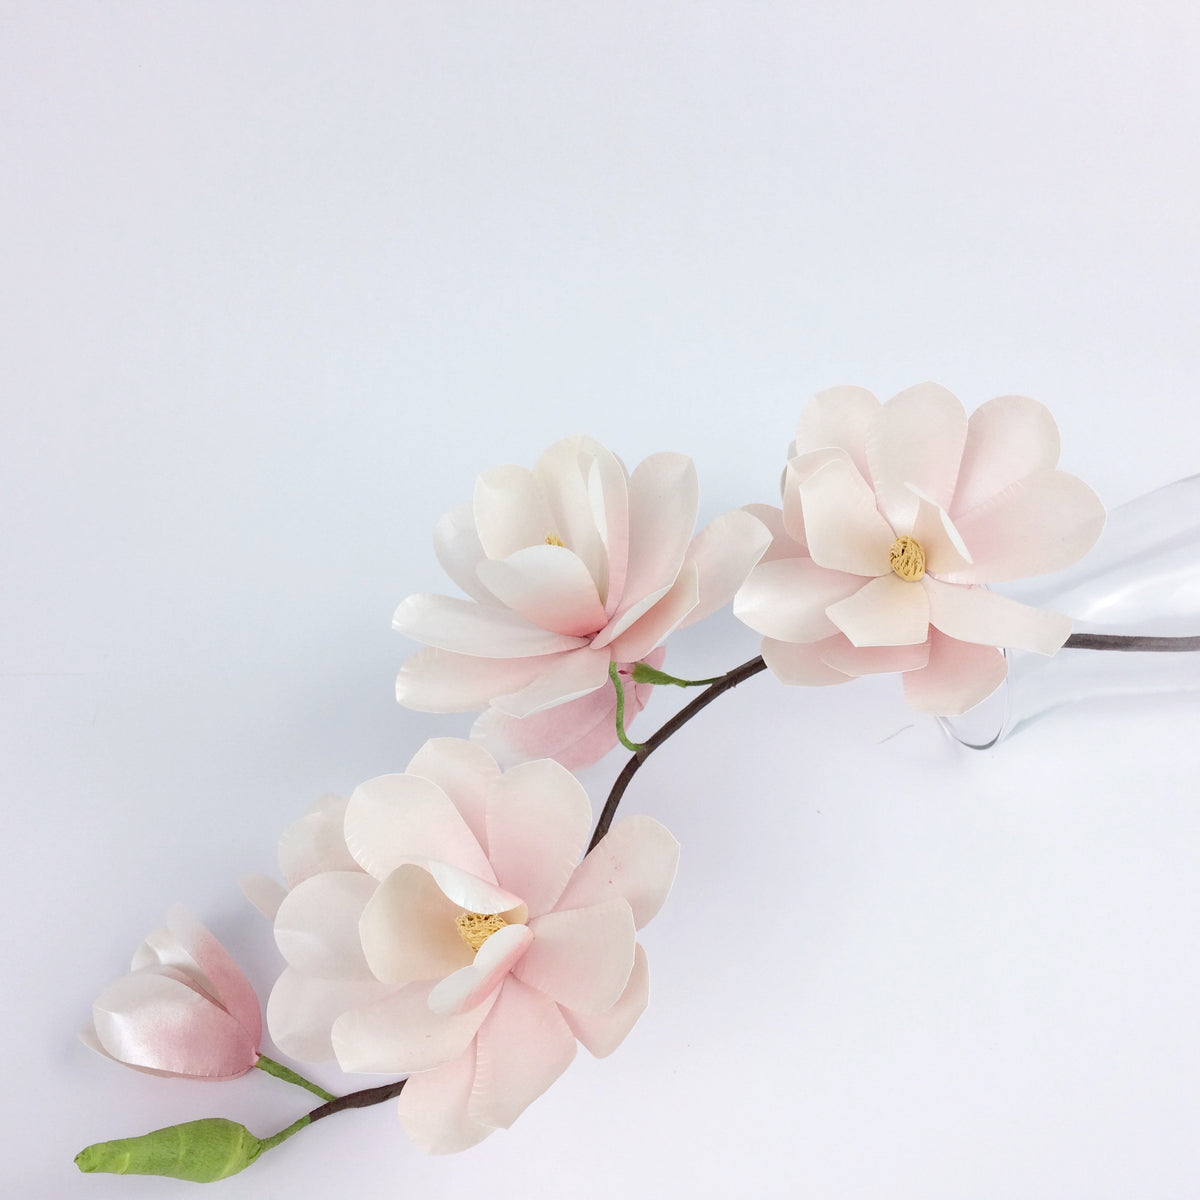 Magnolia Paper Flower Template